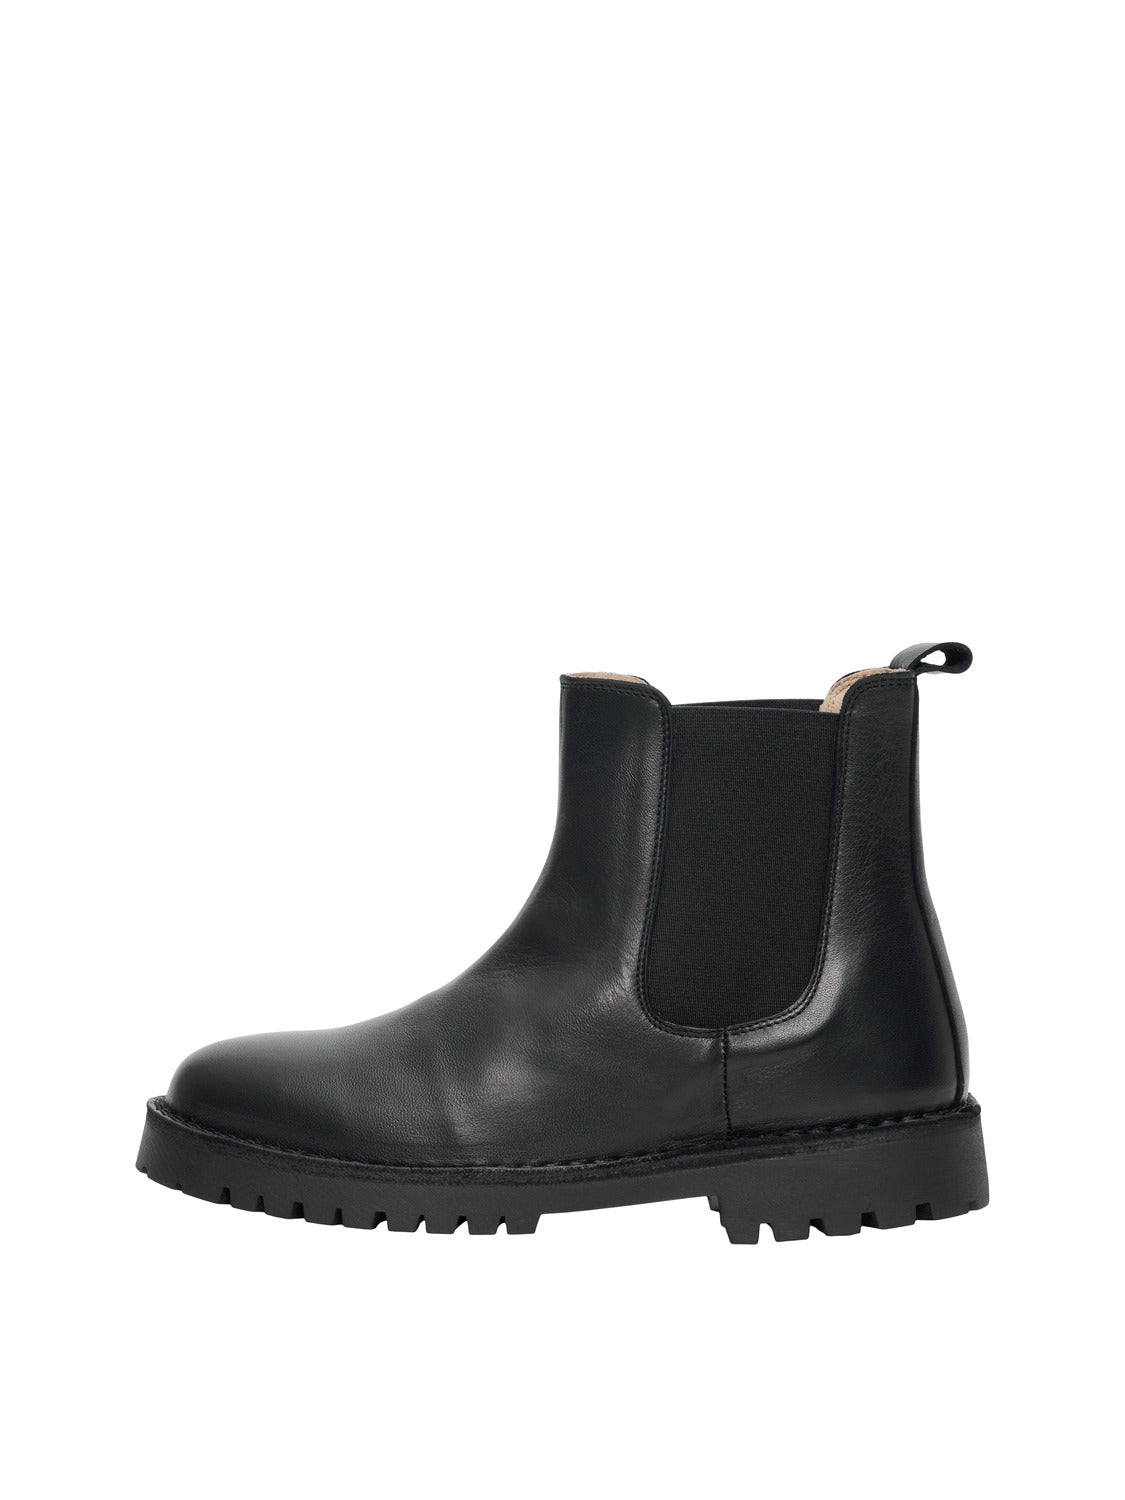 SLFRILEY Boots - Black